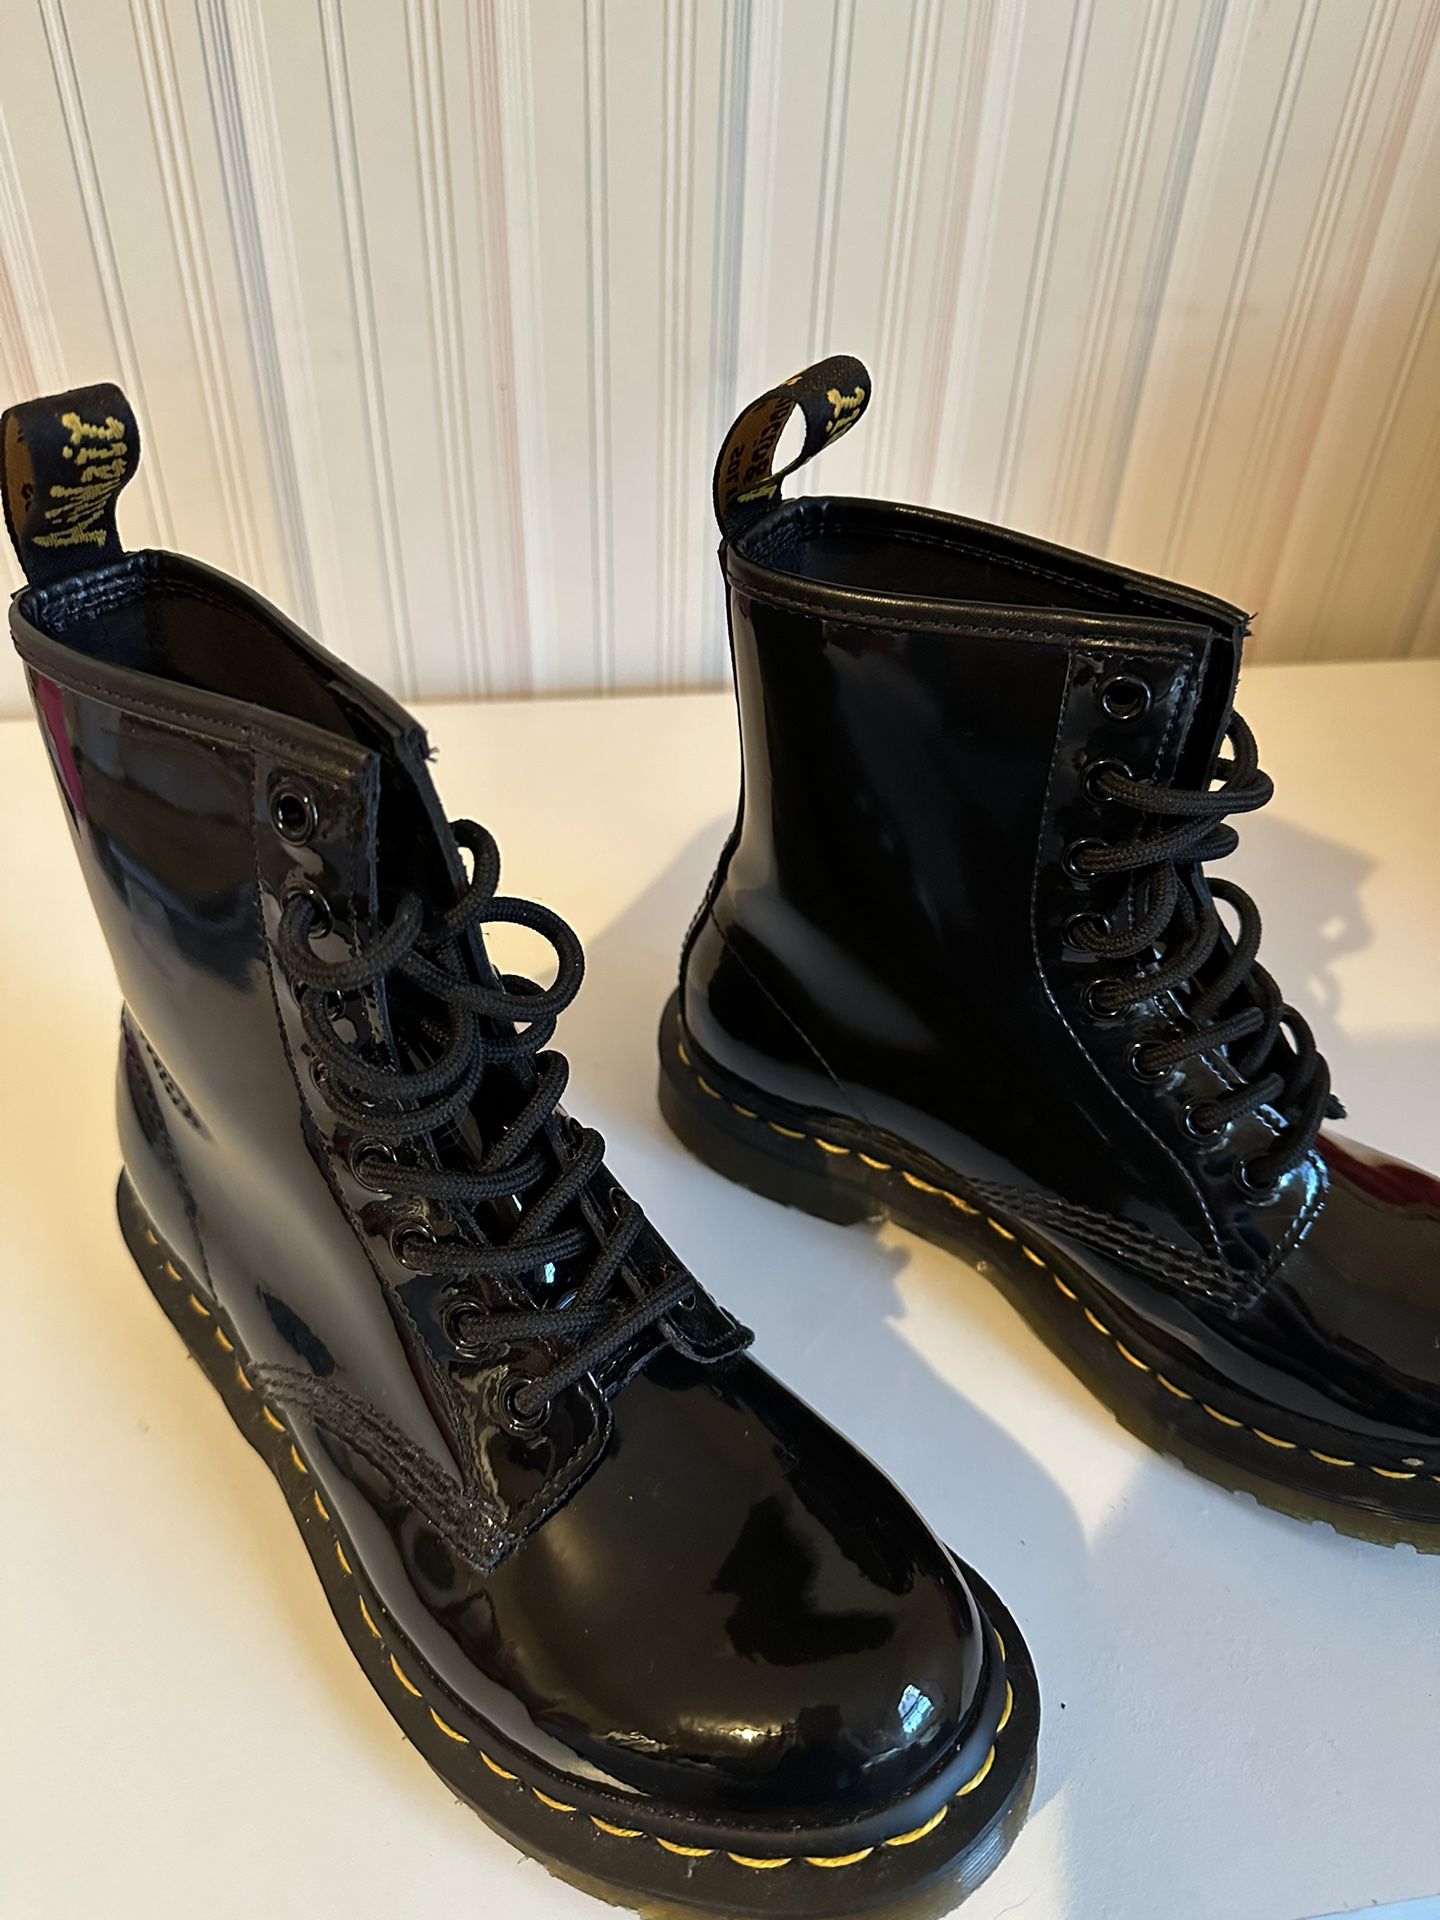 Dr. Martens Boots Size 6 Paid $170 